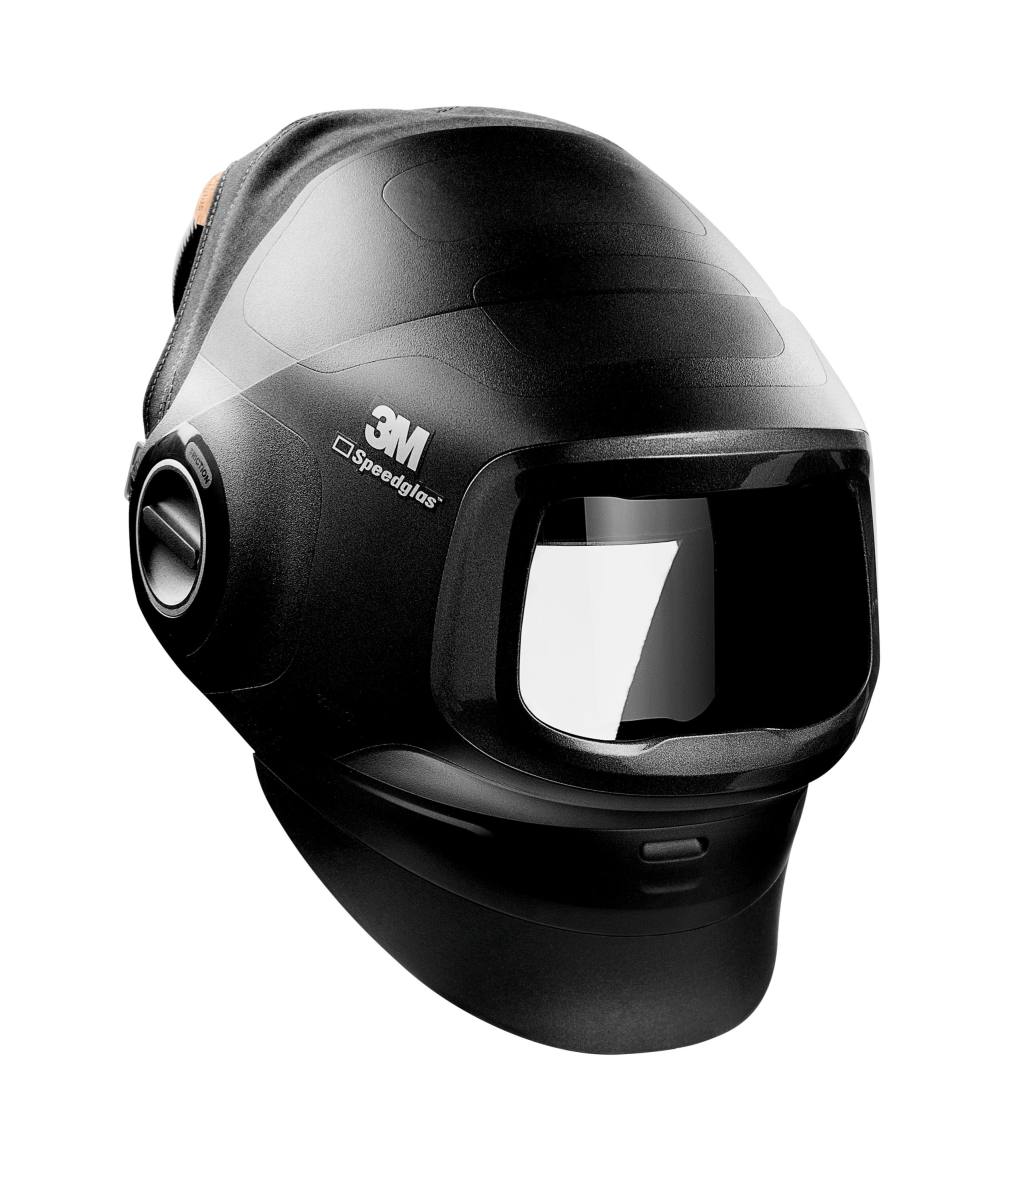 Maschera per saldatura ad alte prestazioni 3M Speedglas G5-01 senza filtro per saldatura, H611100